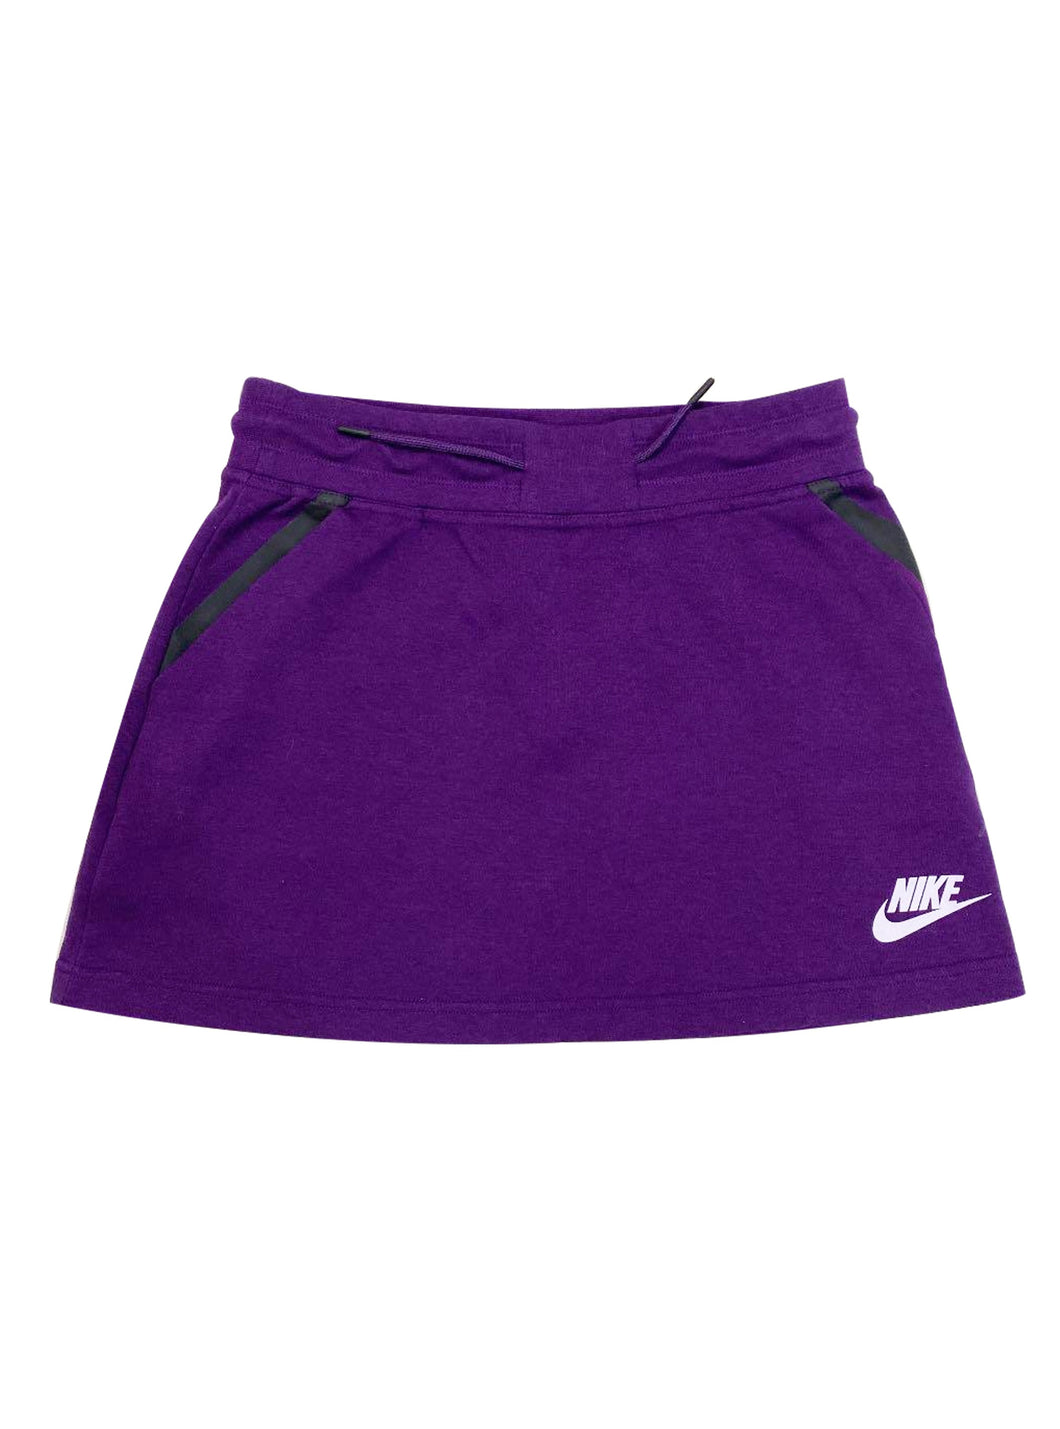 Nike Purple Sports Skirt